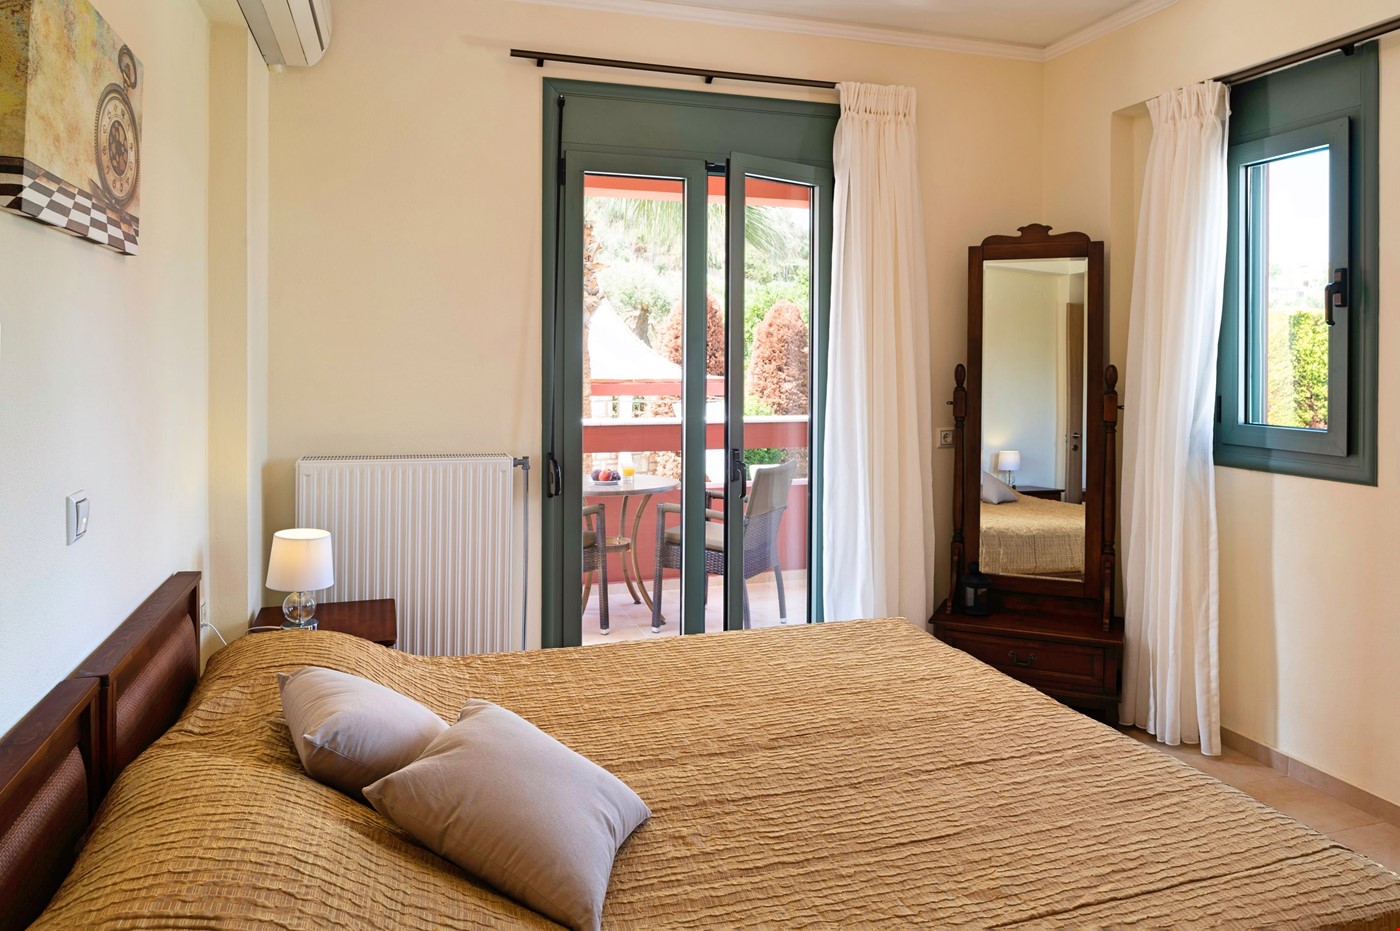 Hotel Xiro Chorio Greece nomad remote 9a12a9d8-fe8f-4b53-bc26-ea3a4ac8bc1e_Bedroom3bVillaAlkyoniAlkyonidesVillasRethymnoCrete.jpg